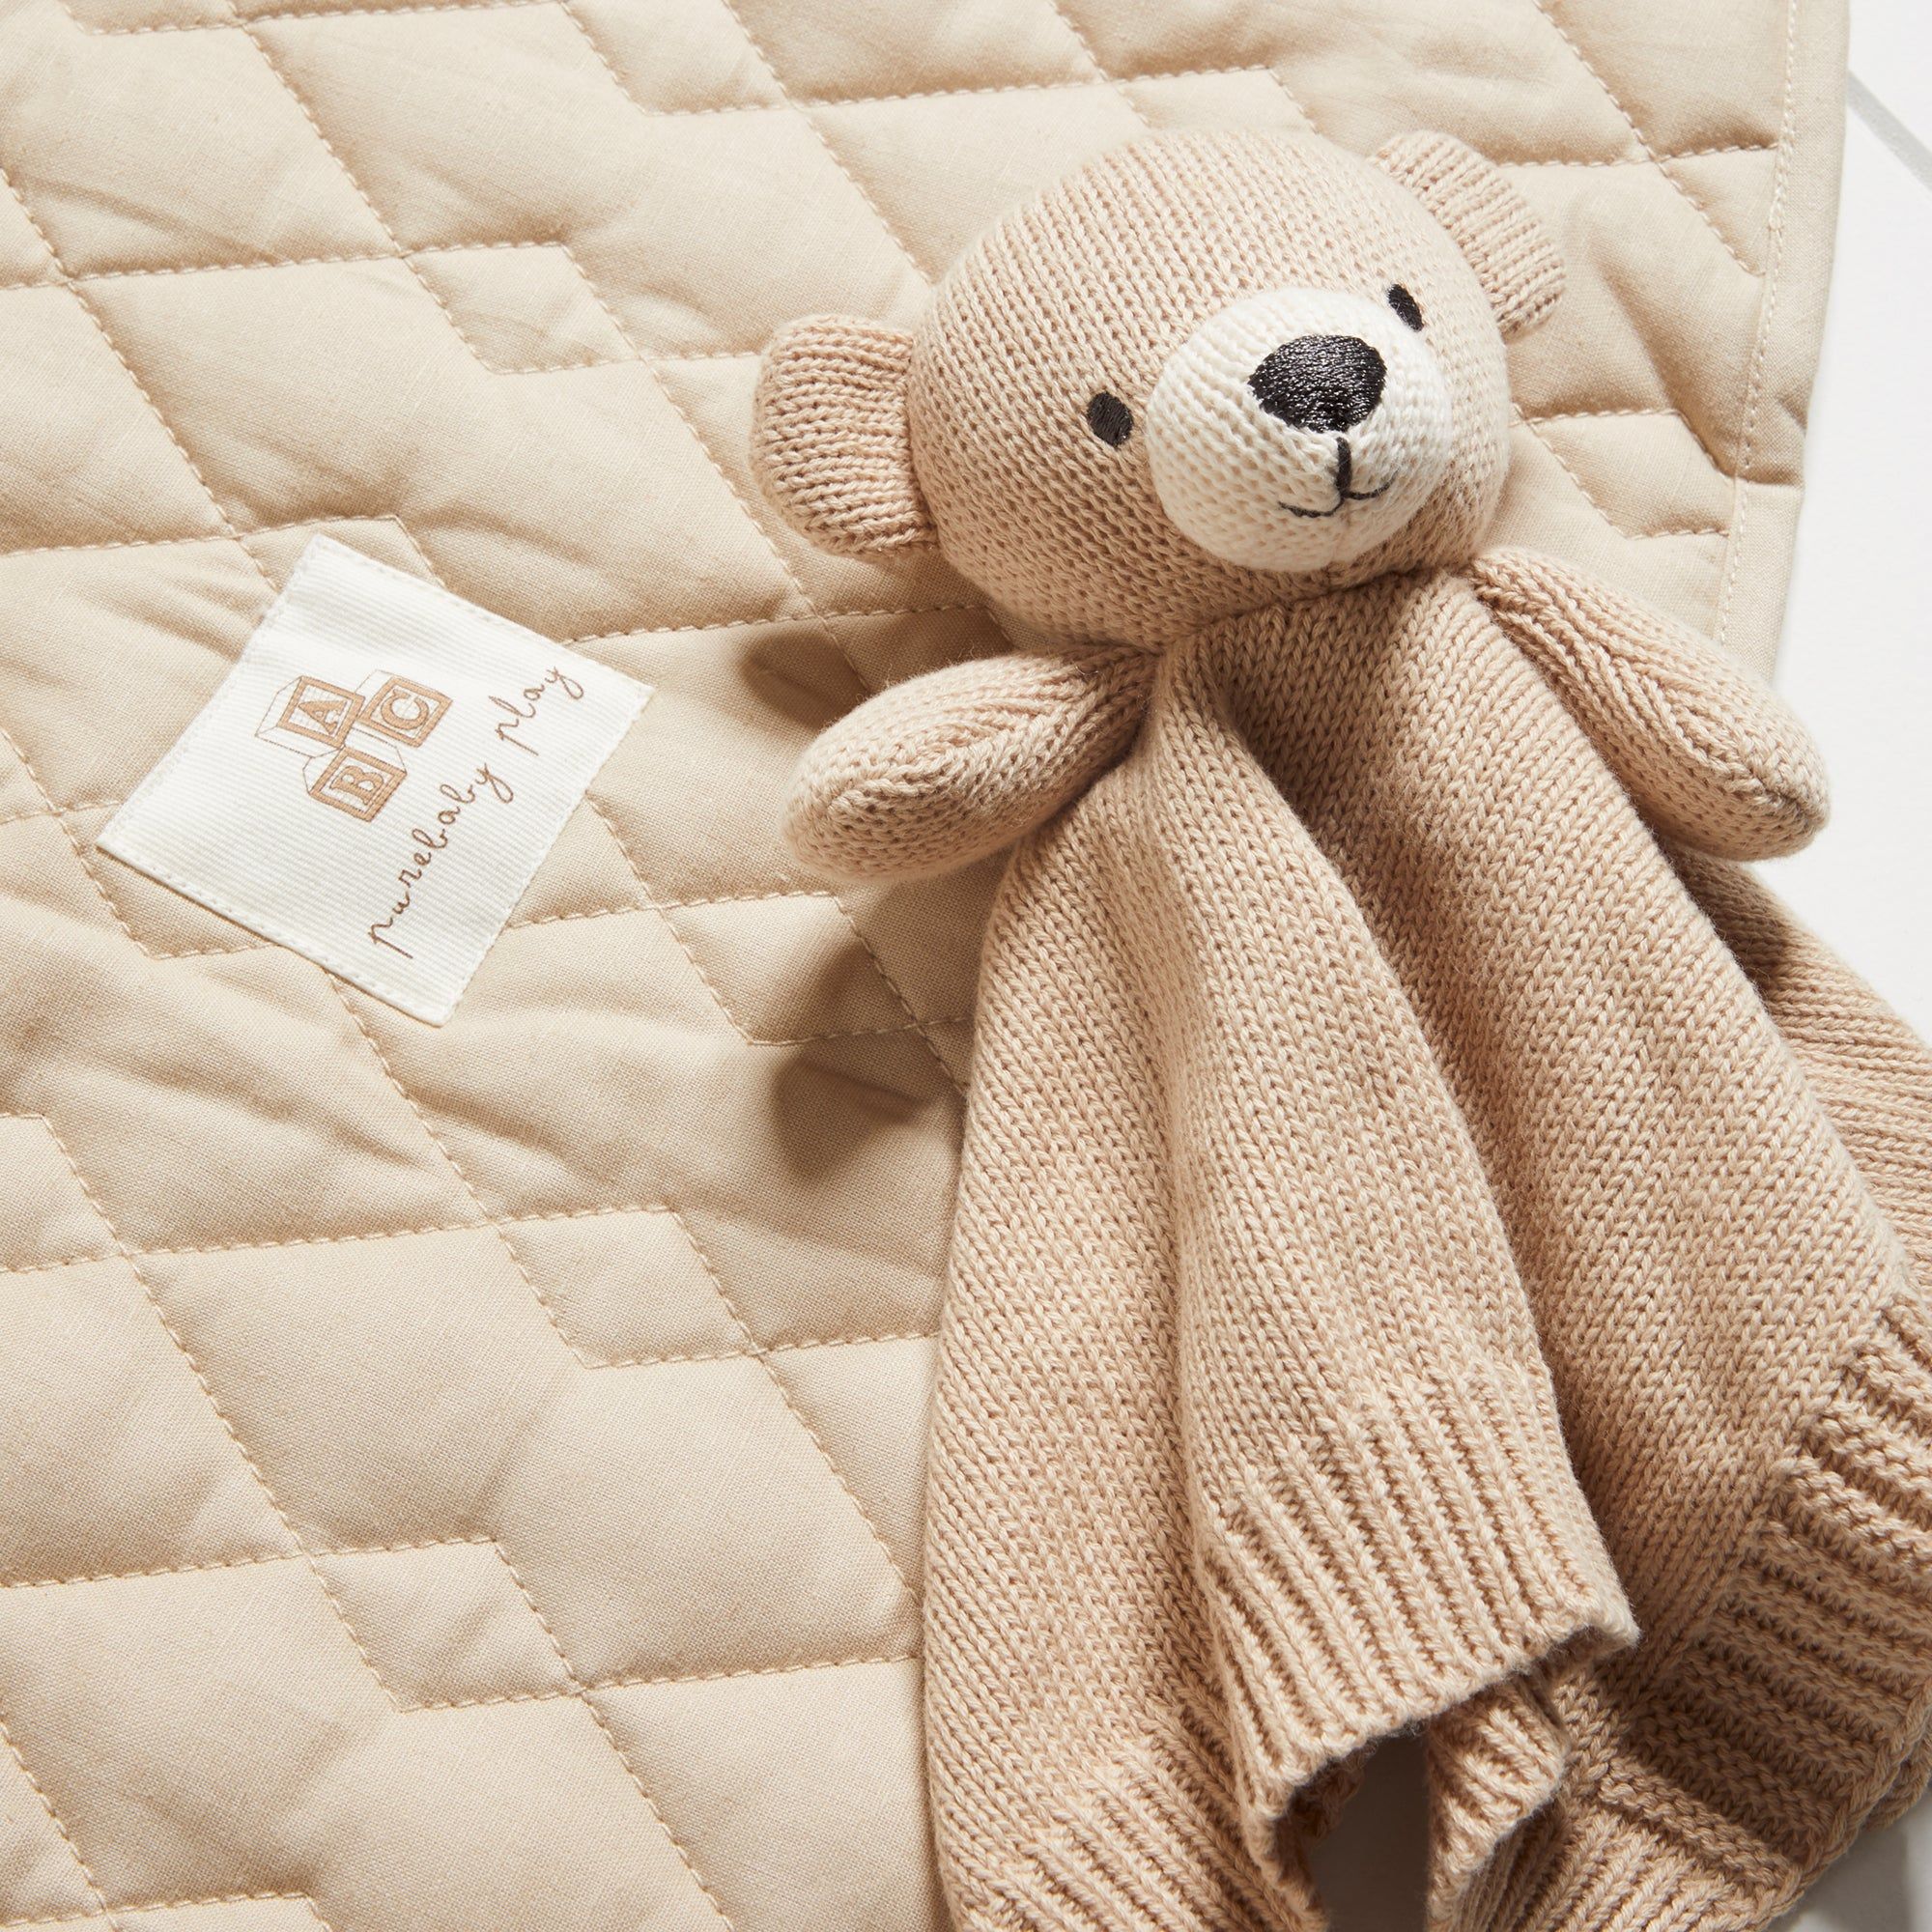 Bear comforter laying on play mat